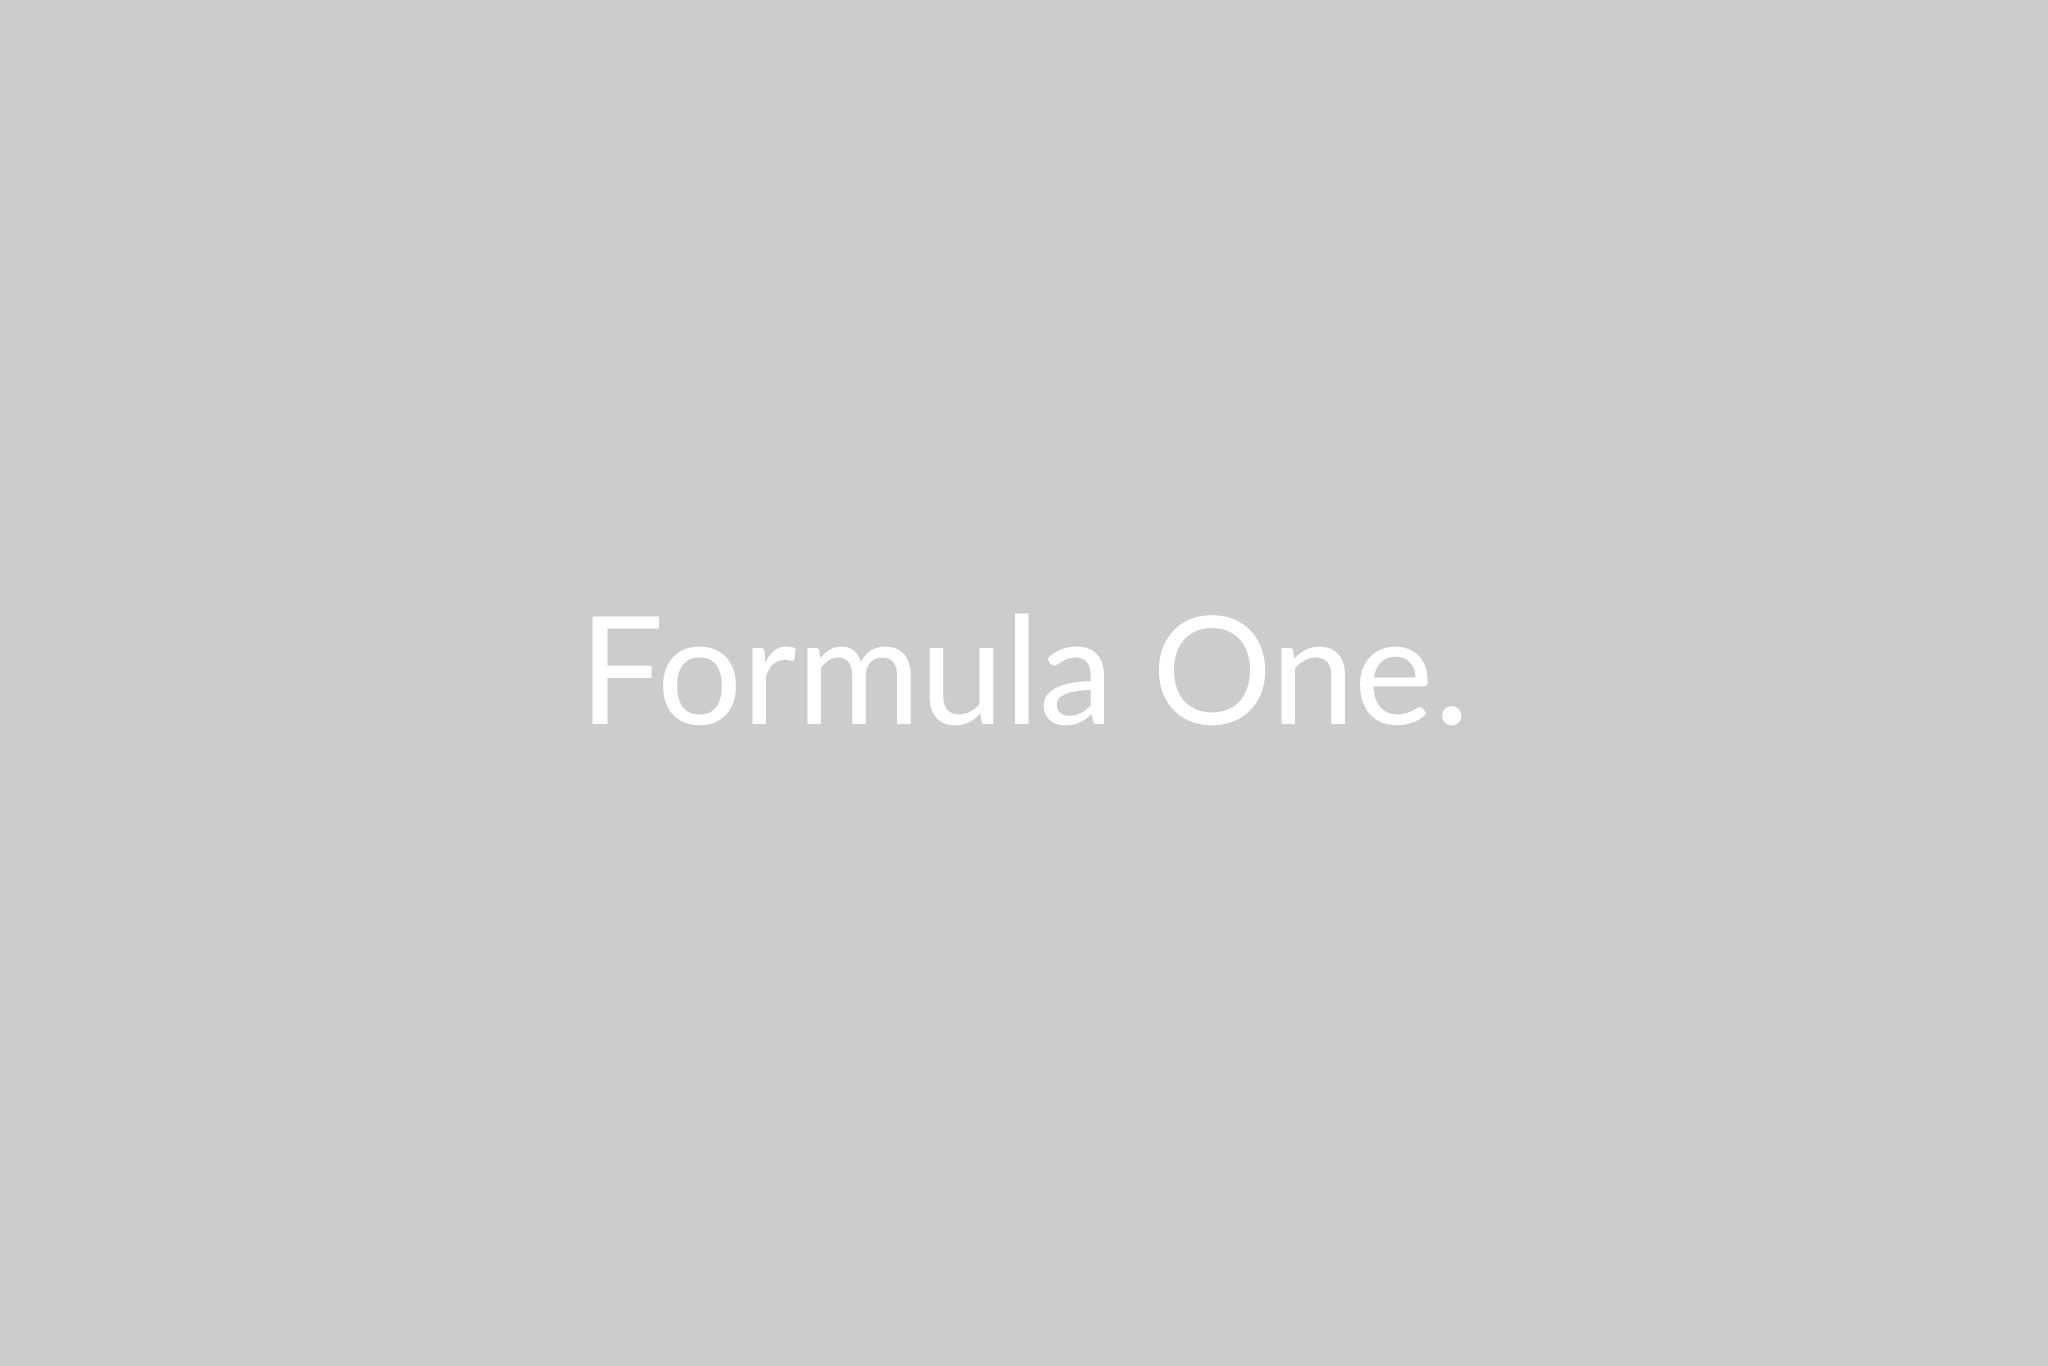 formula one